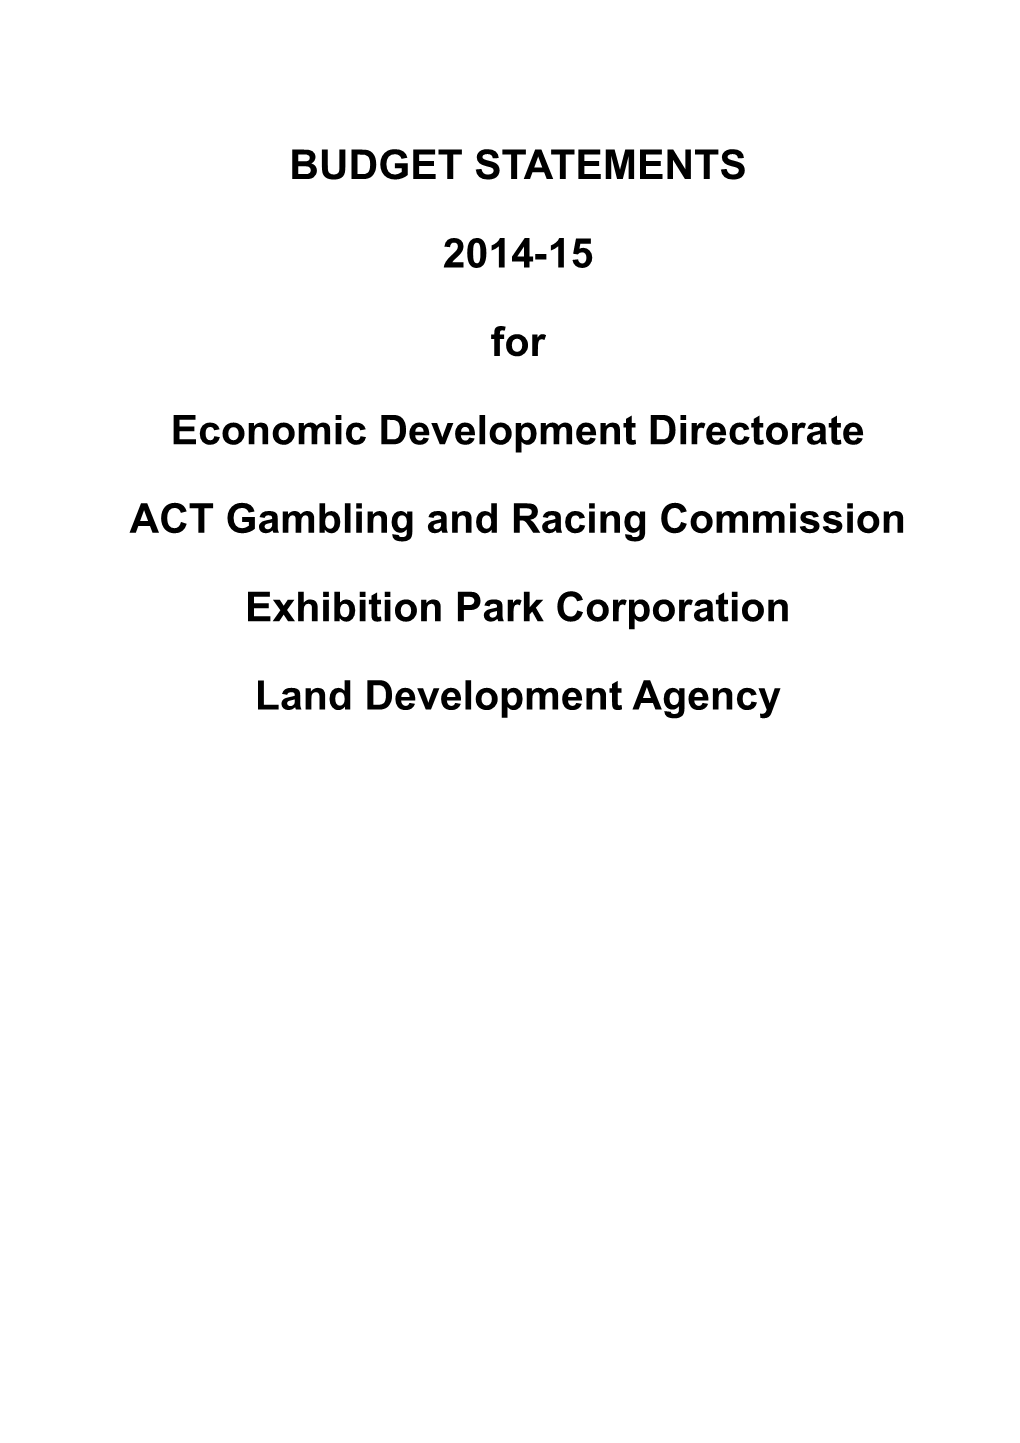 2014-15 Economic Development Directorate Budget Statement